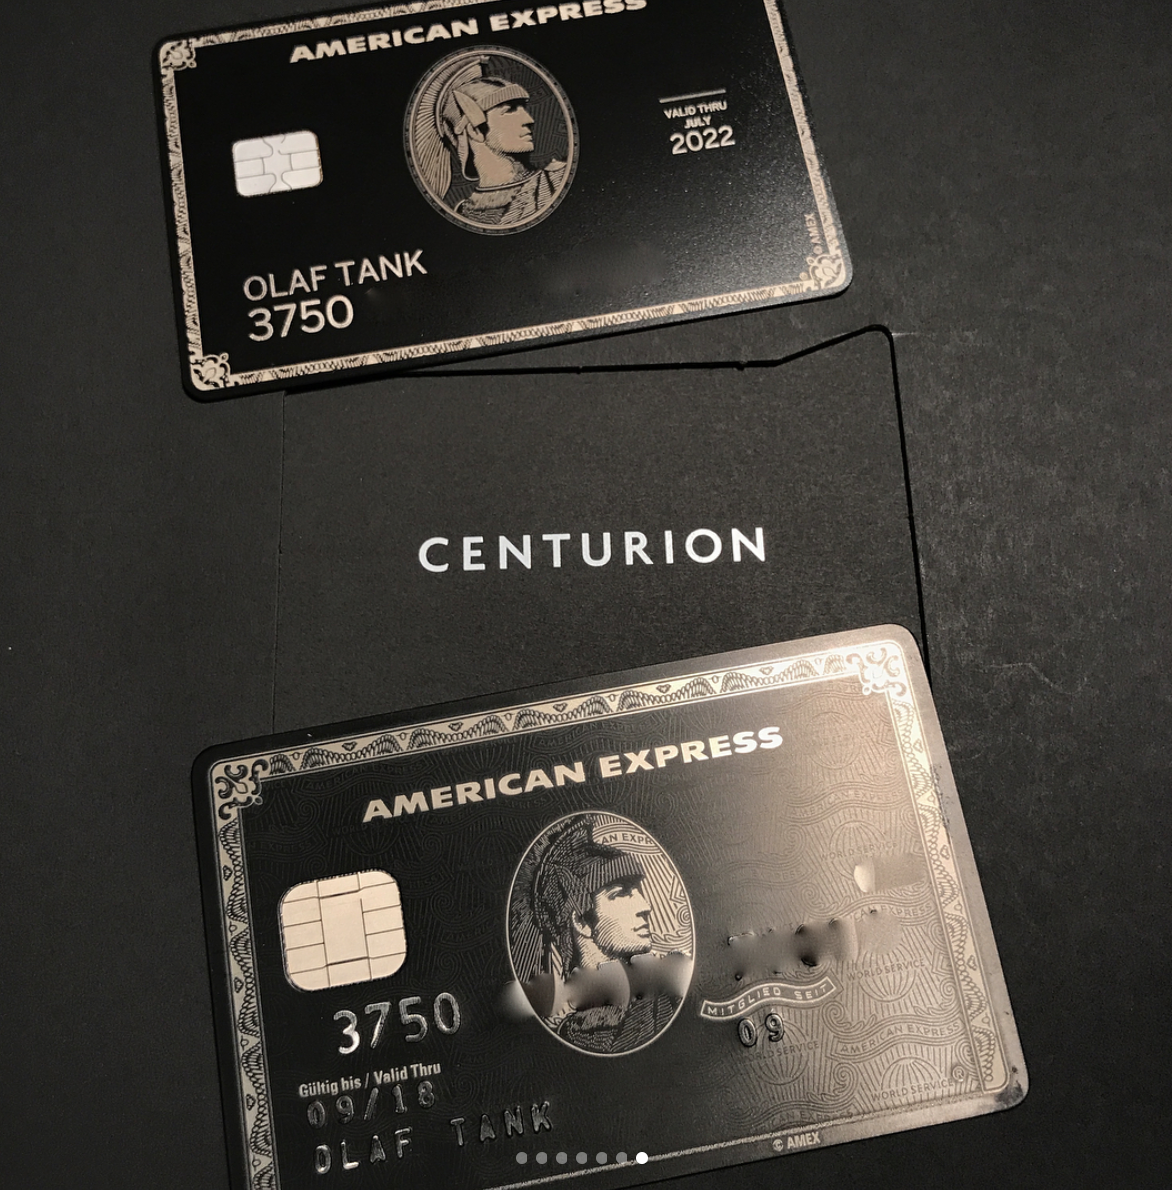 new amex centurion card